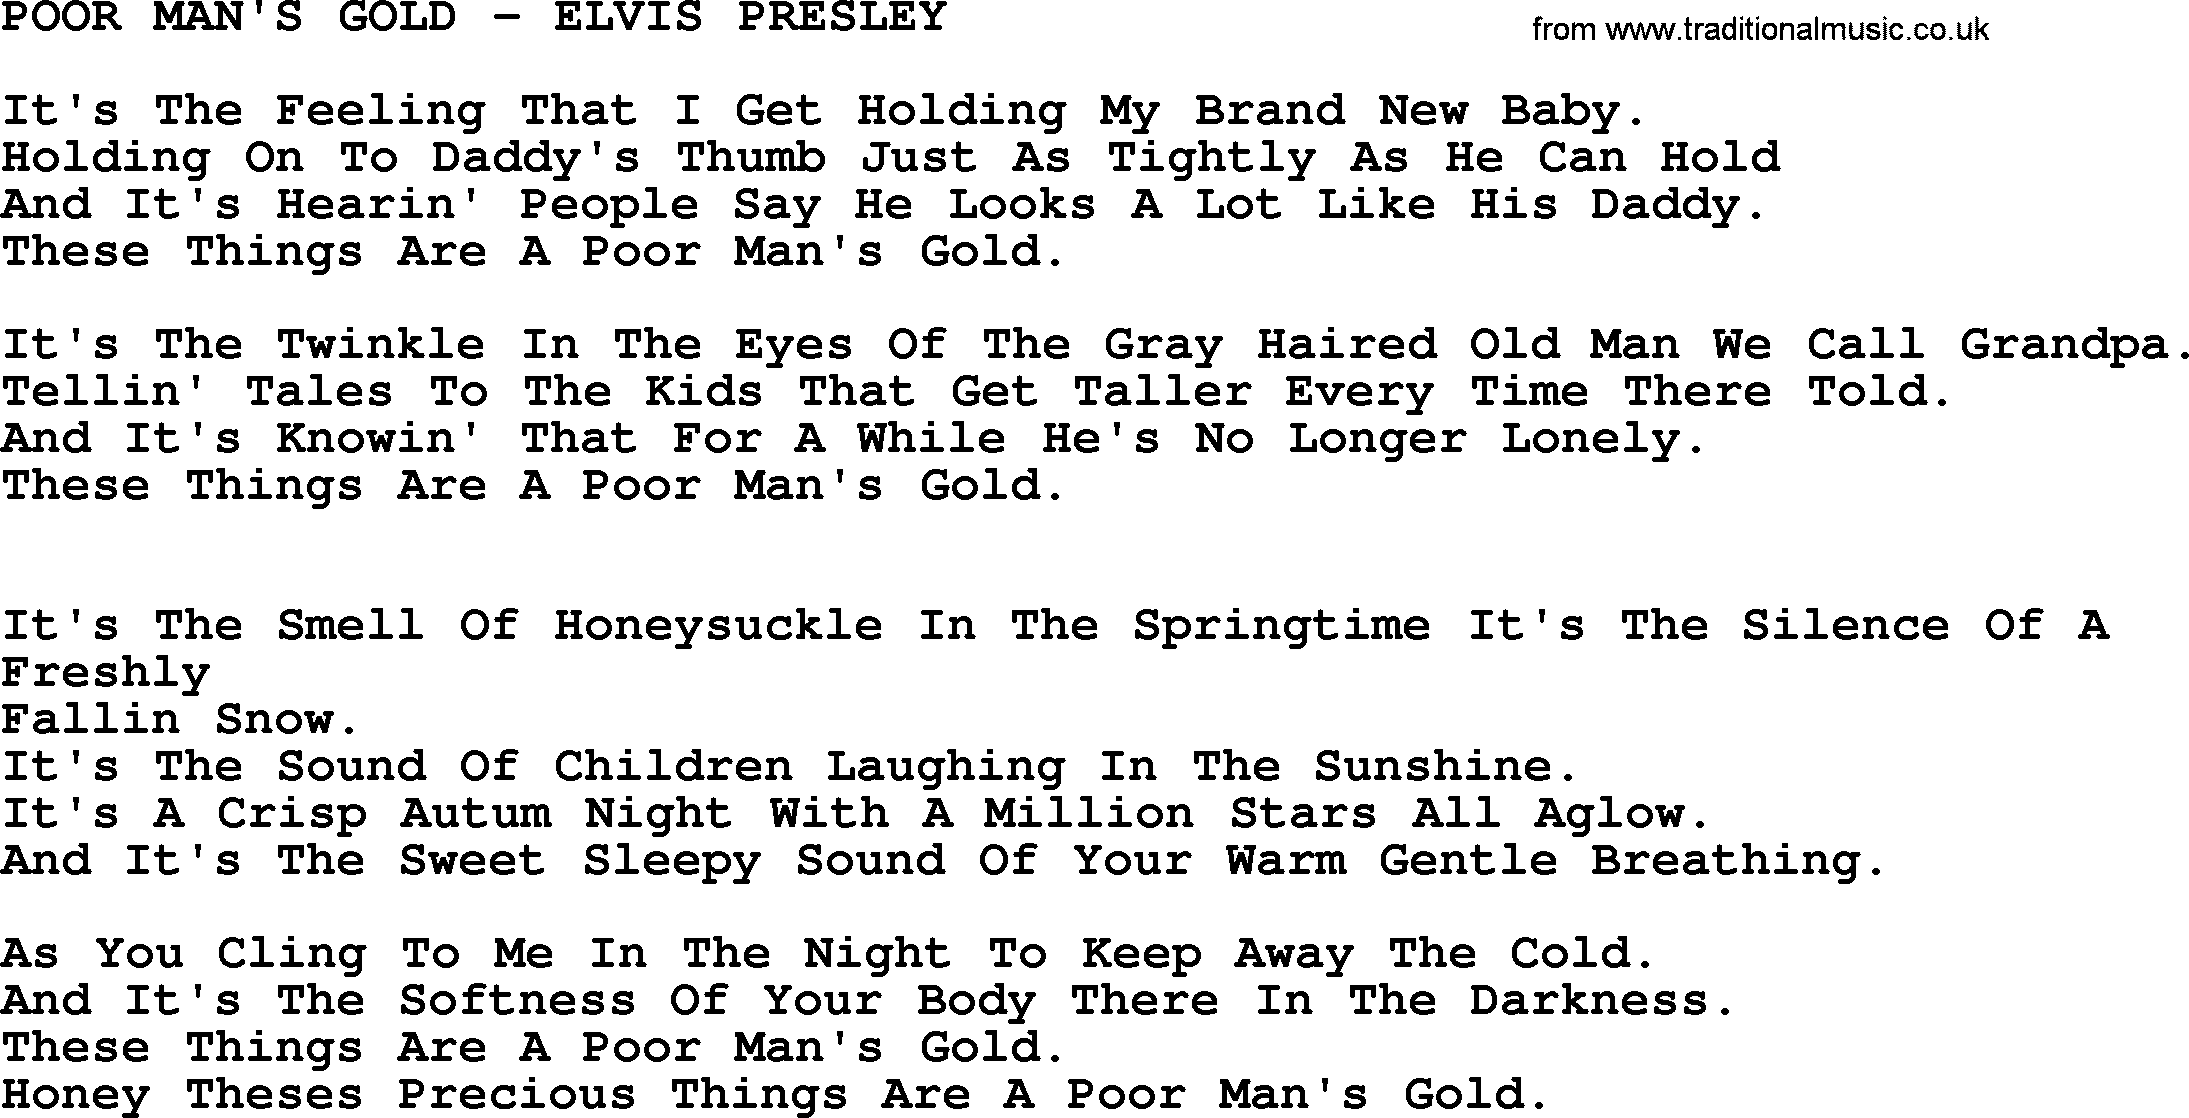 Elvis Presley song: Poor Man's Gold-Elvis Presley-.txt lyrics and chords